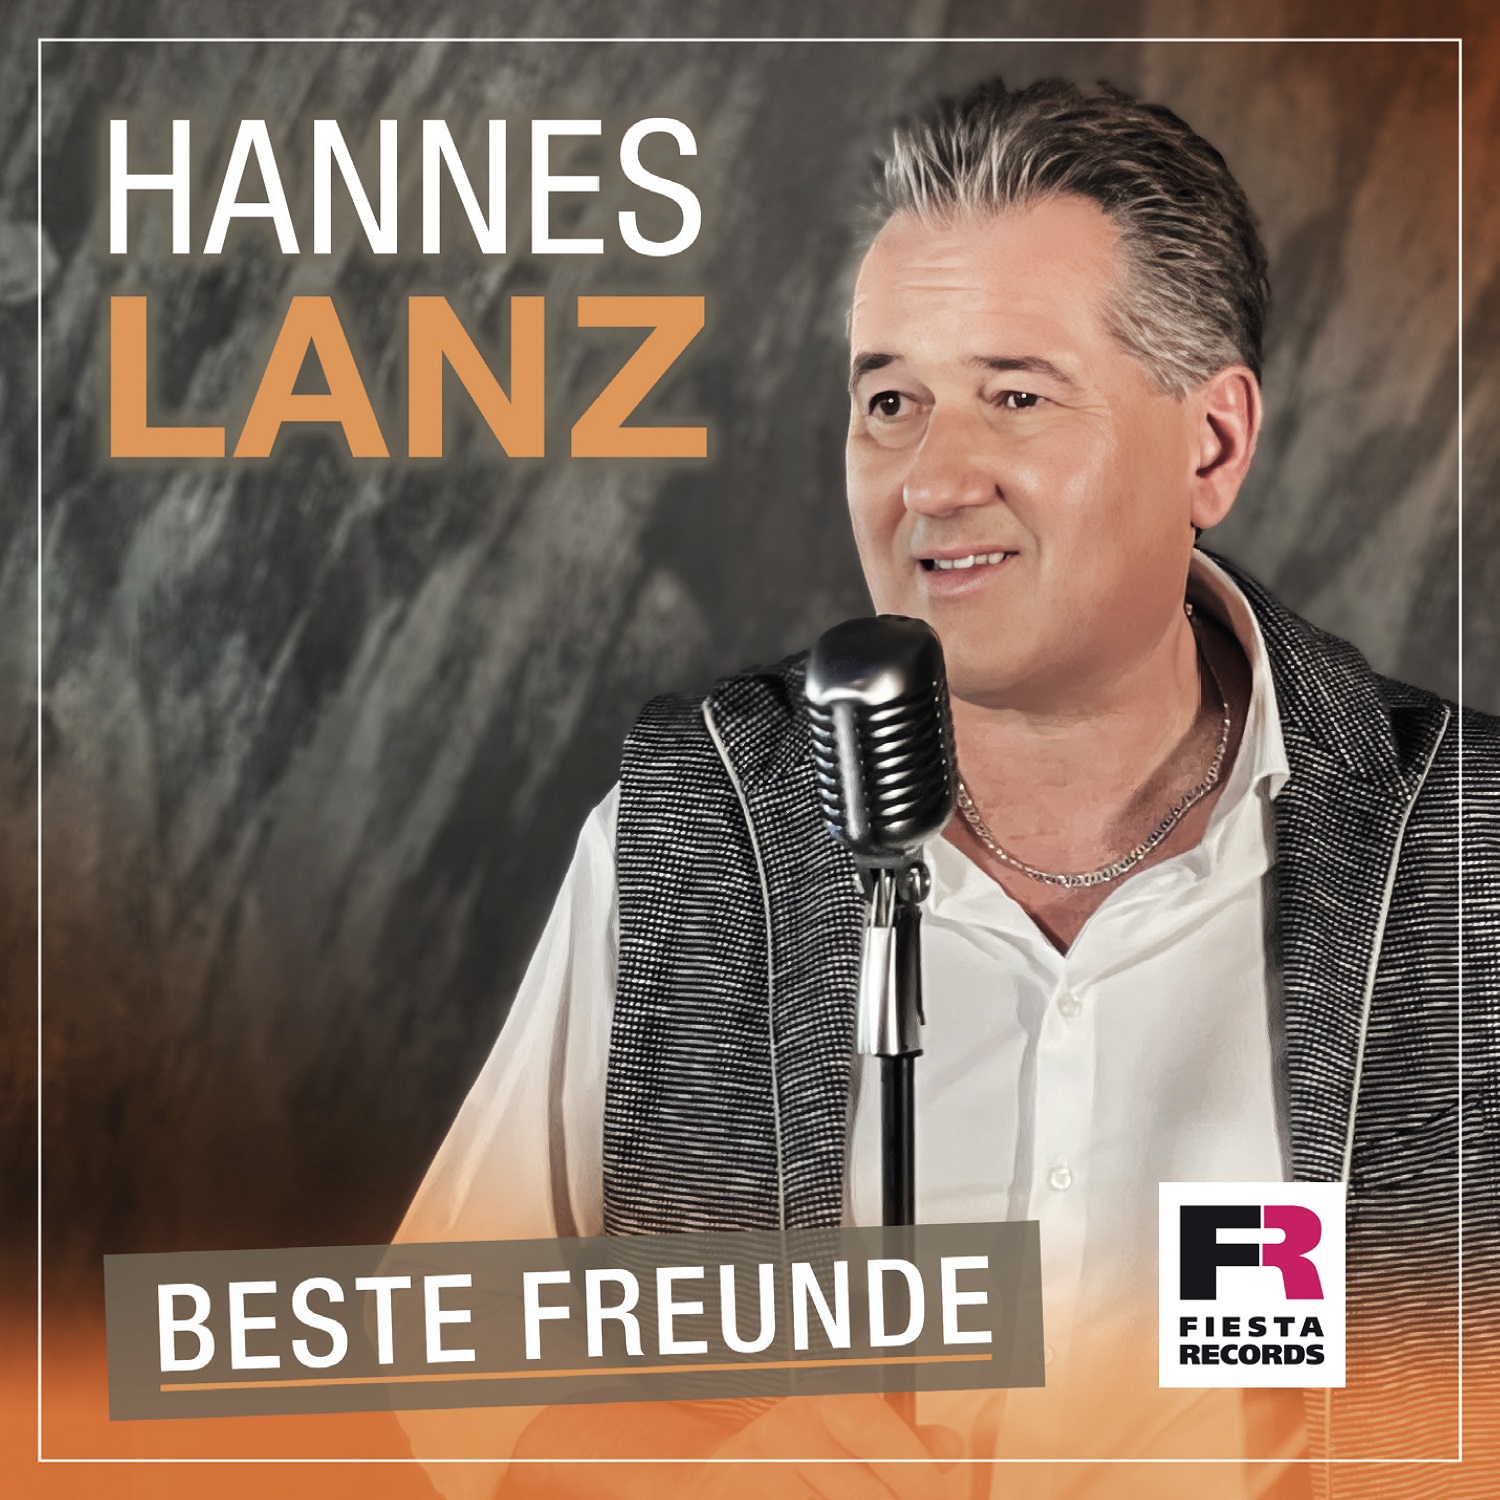 Hannes Lanz - Beste Freunde - Cover.jpg